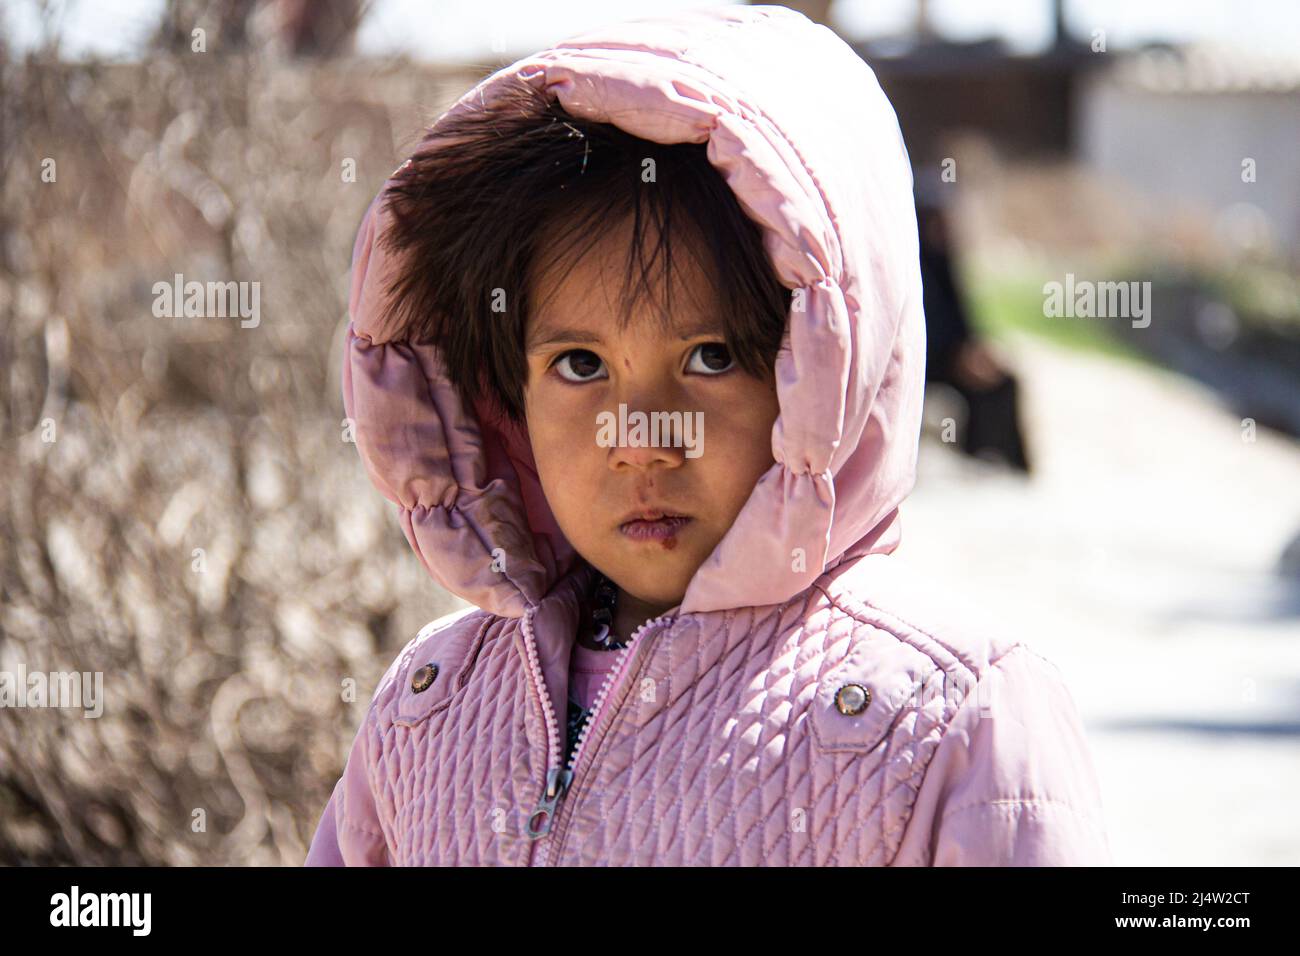 An Afghan girl Stock Photo